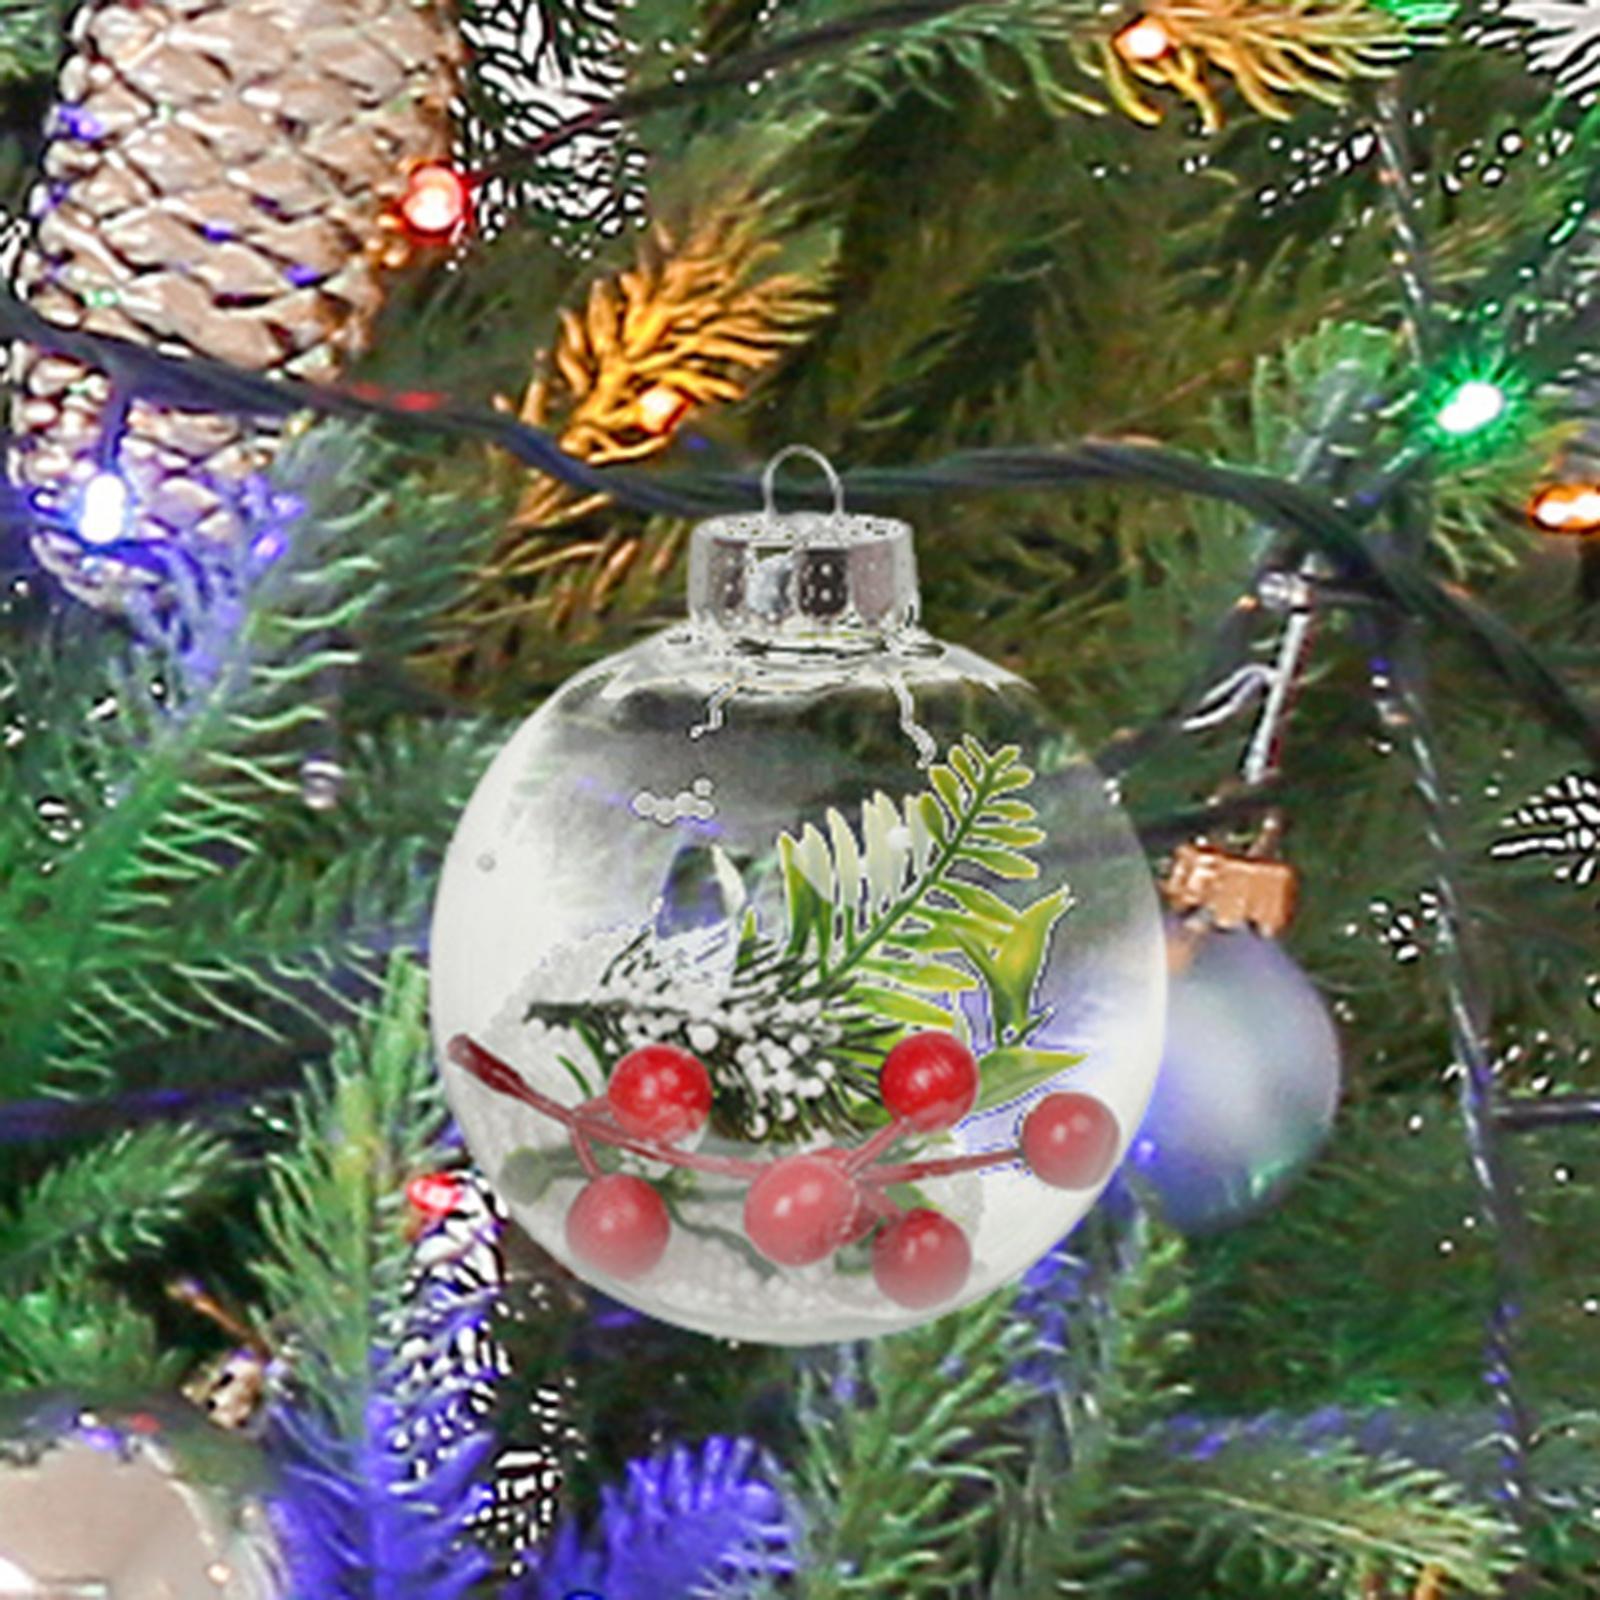 3x Clear Christmas Ball Ornaments Party Supplies 6cm 8cm 10cm